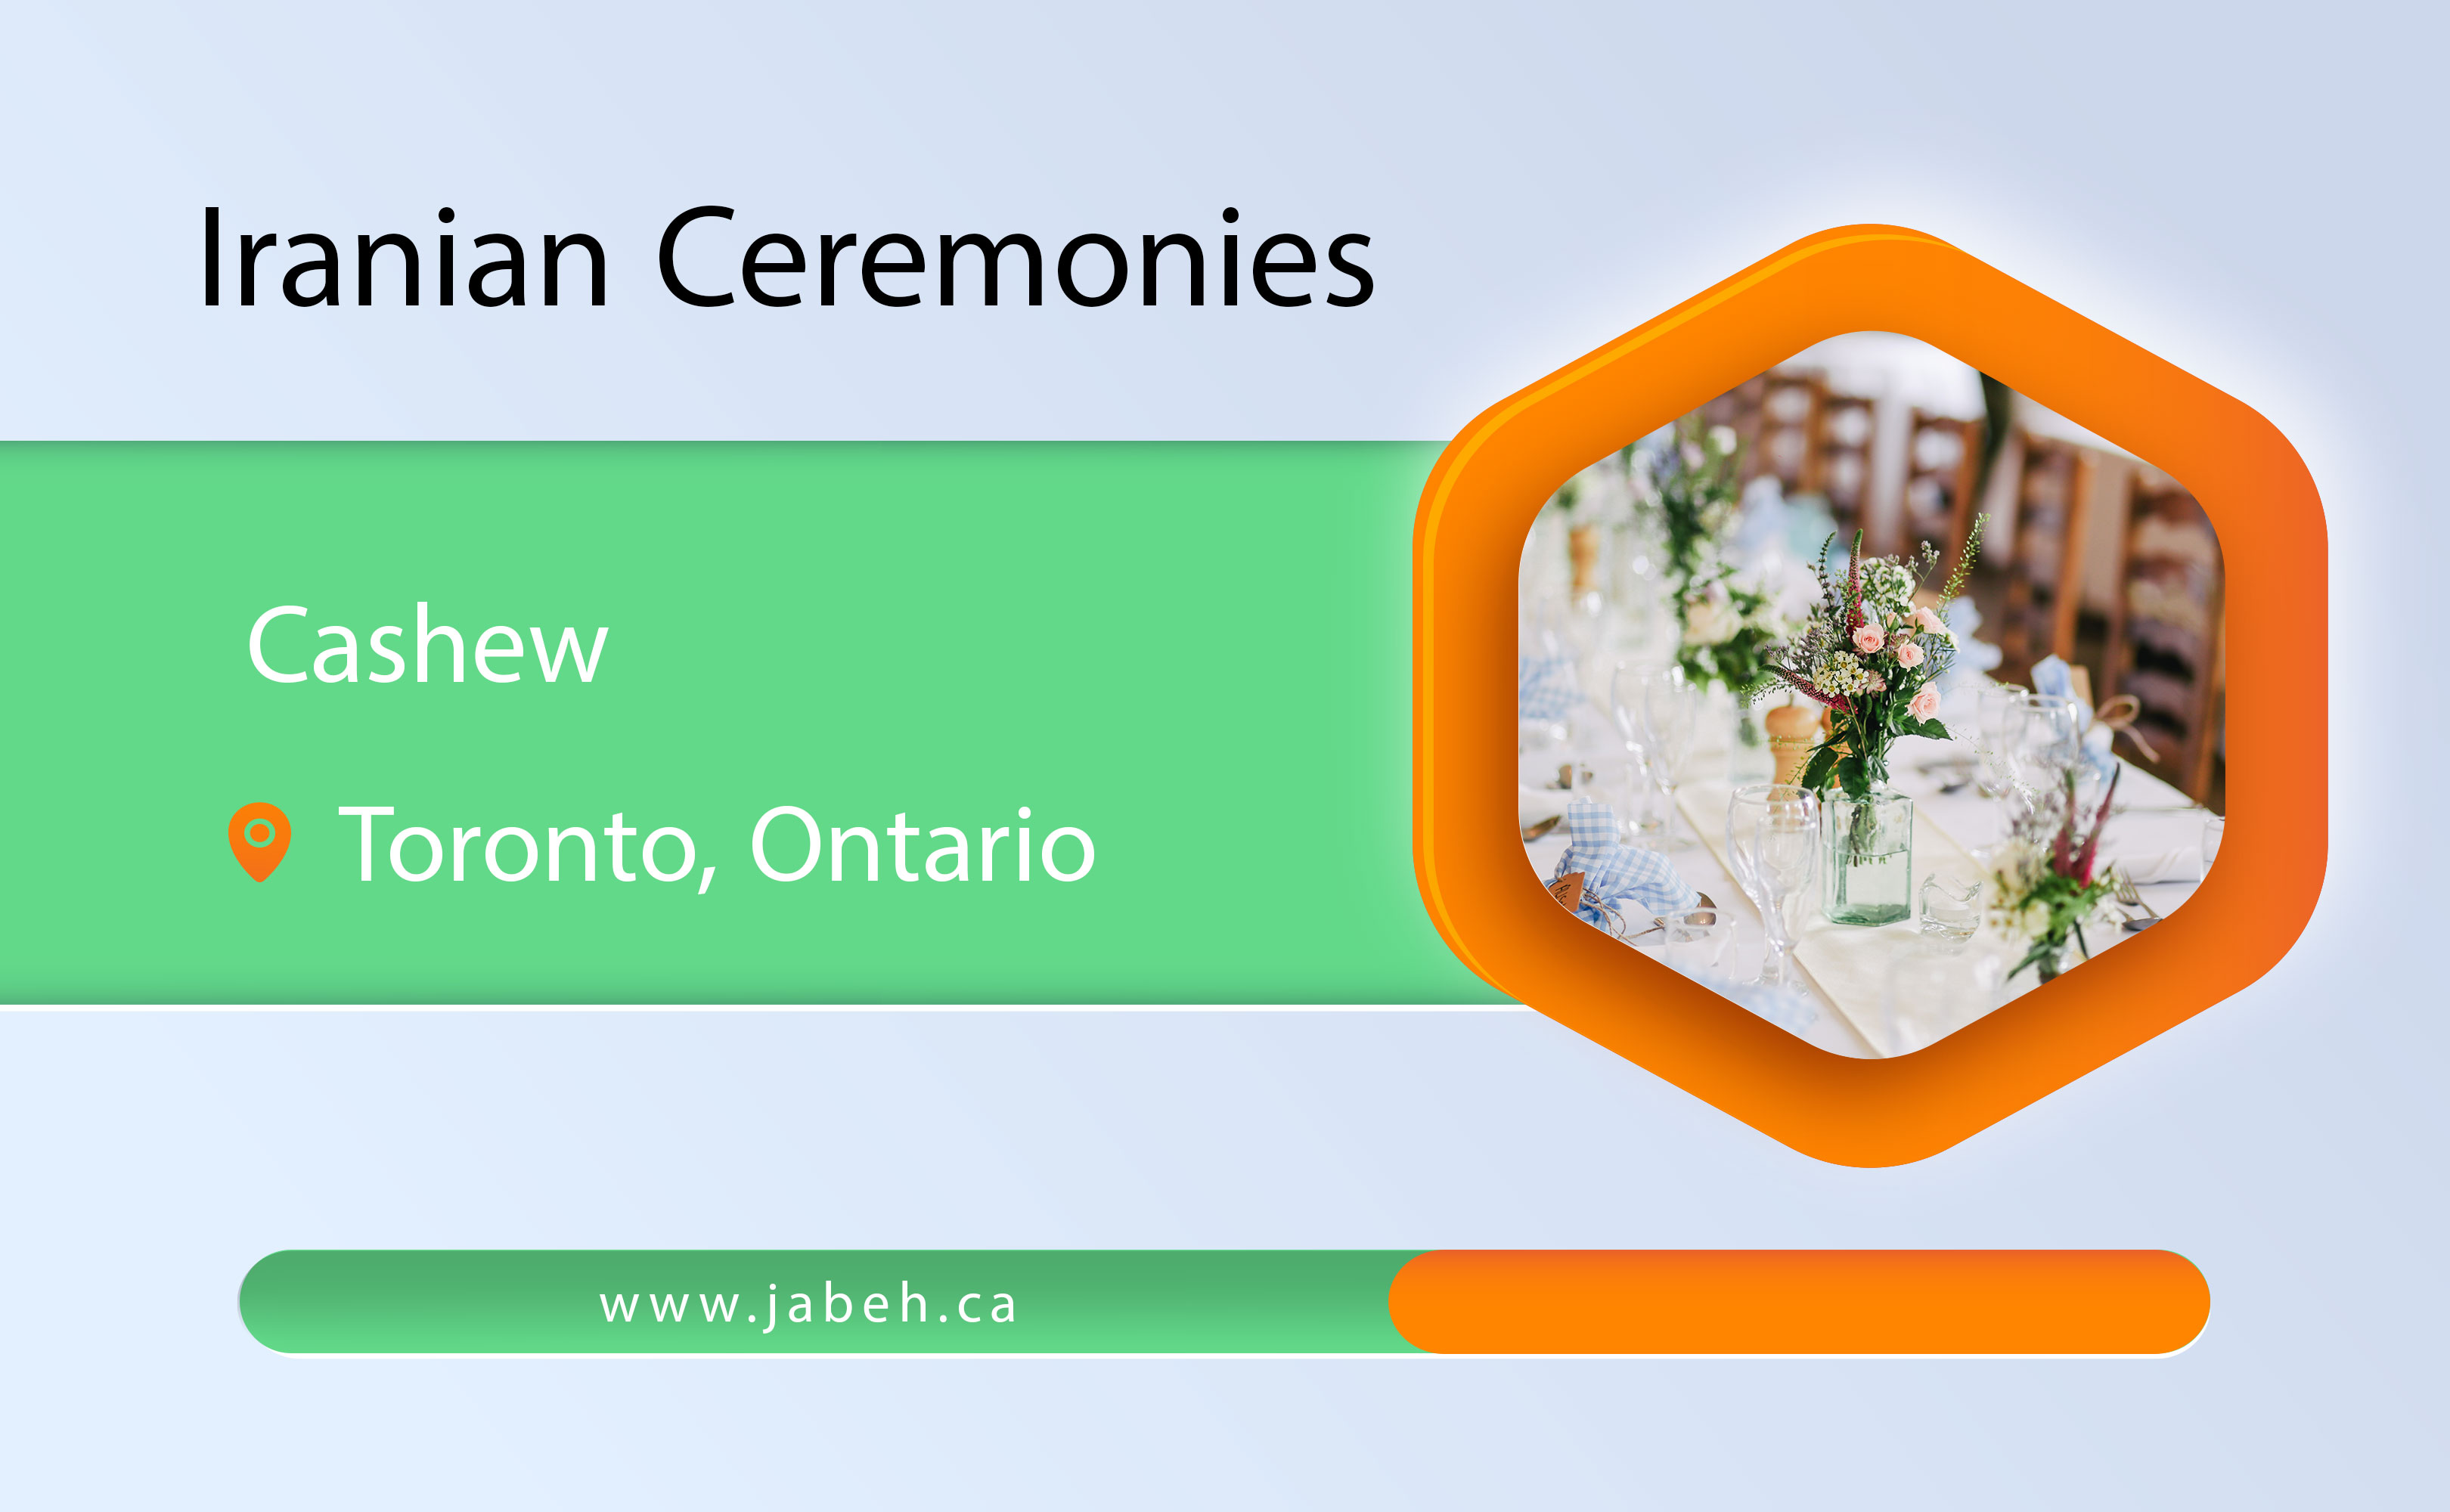 Ceremonies and ceremonies of Iranian cashmere in Toronto, Ontario